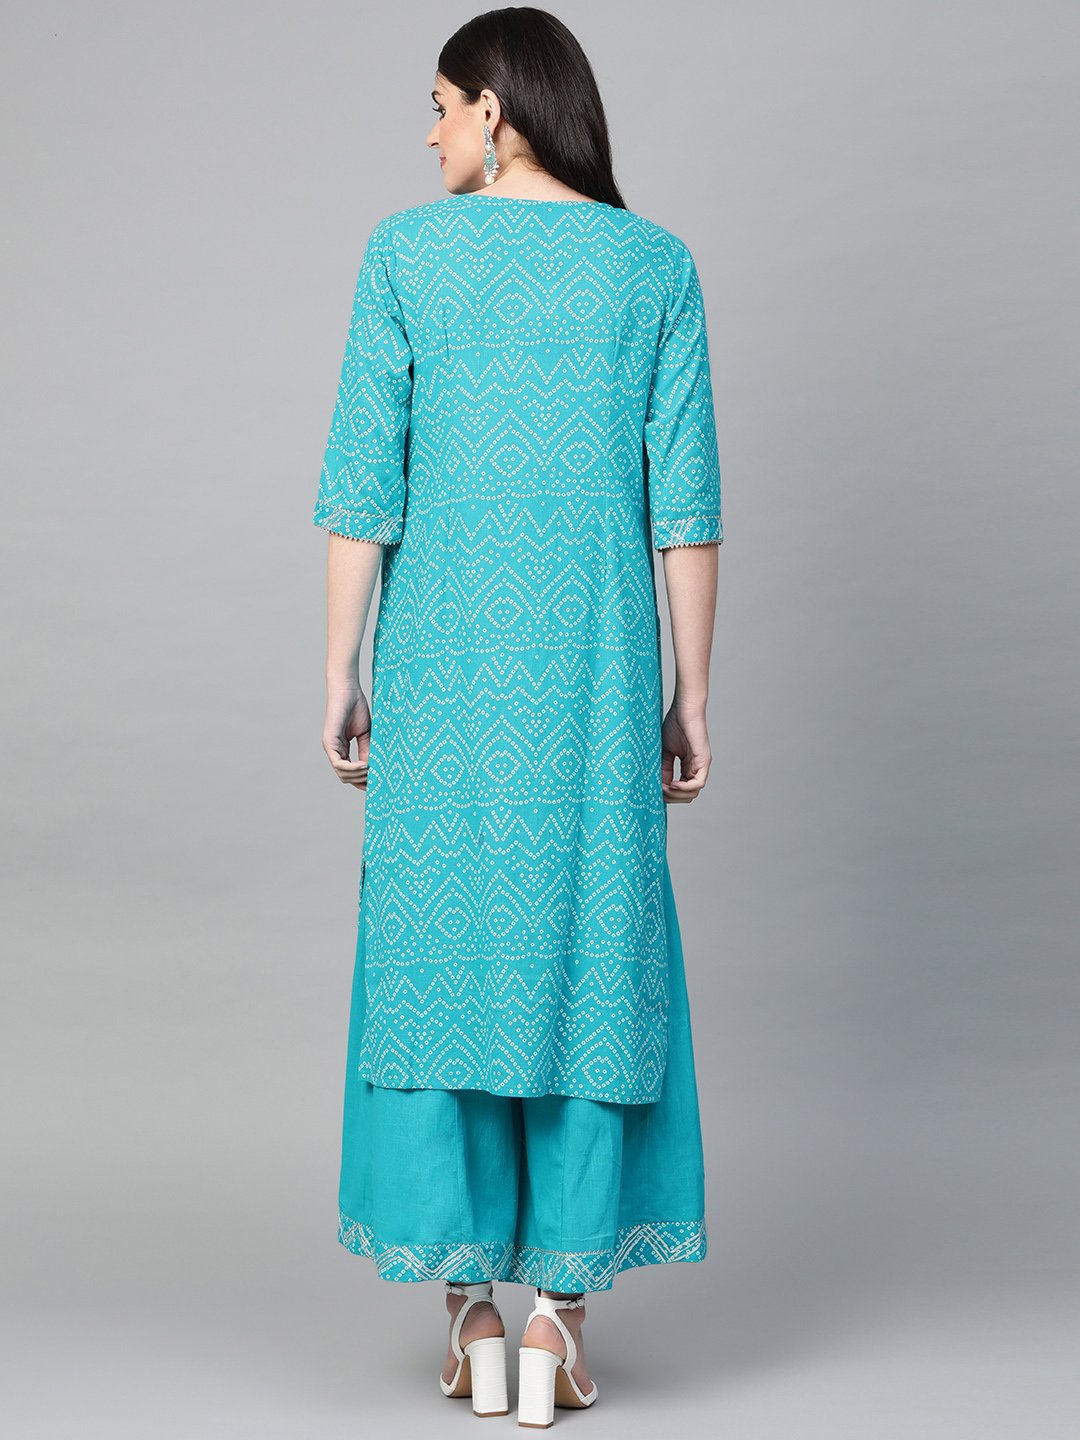 Ishin Women's Cotton Blue Bandhani Print A-Line Kurta Palazzo Set